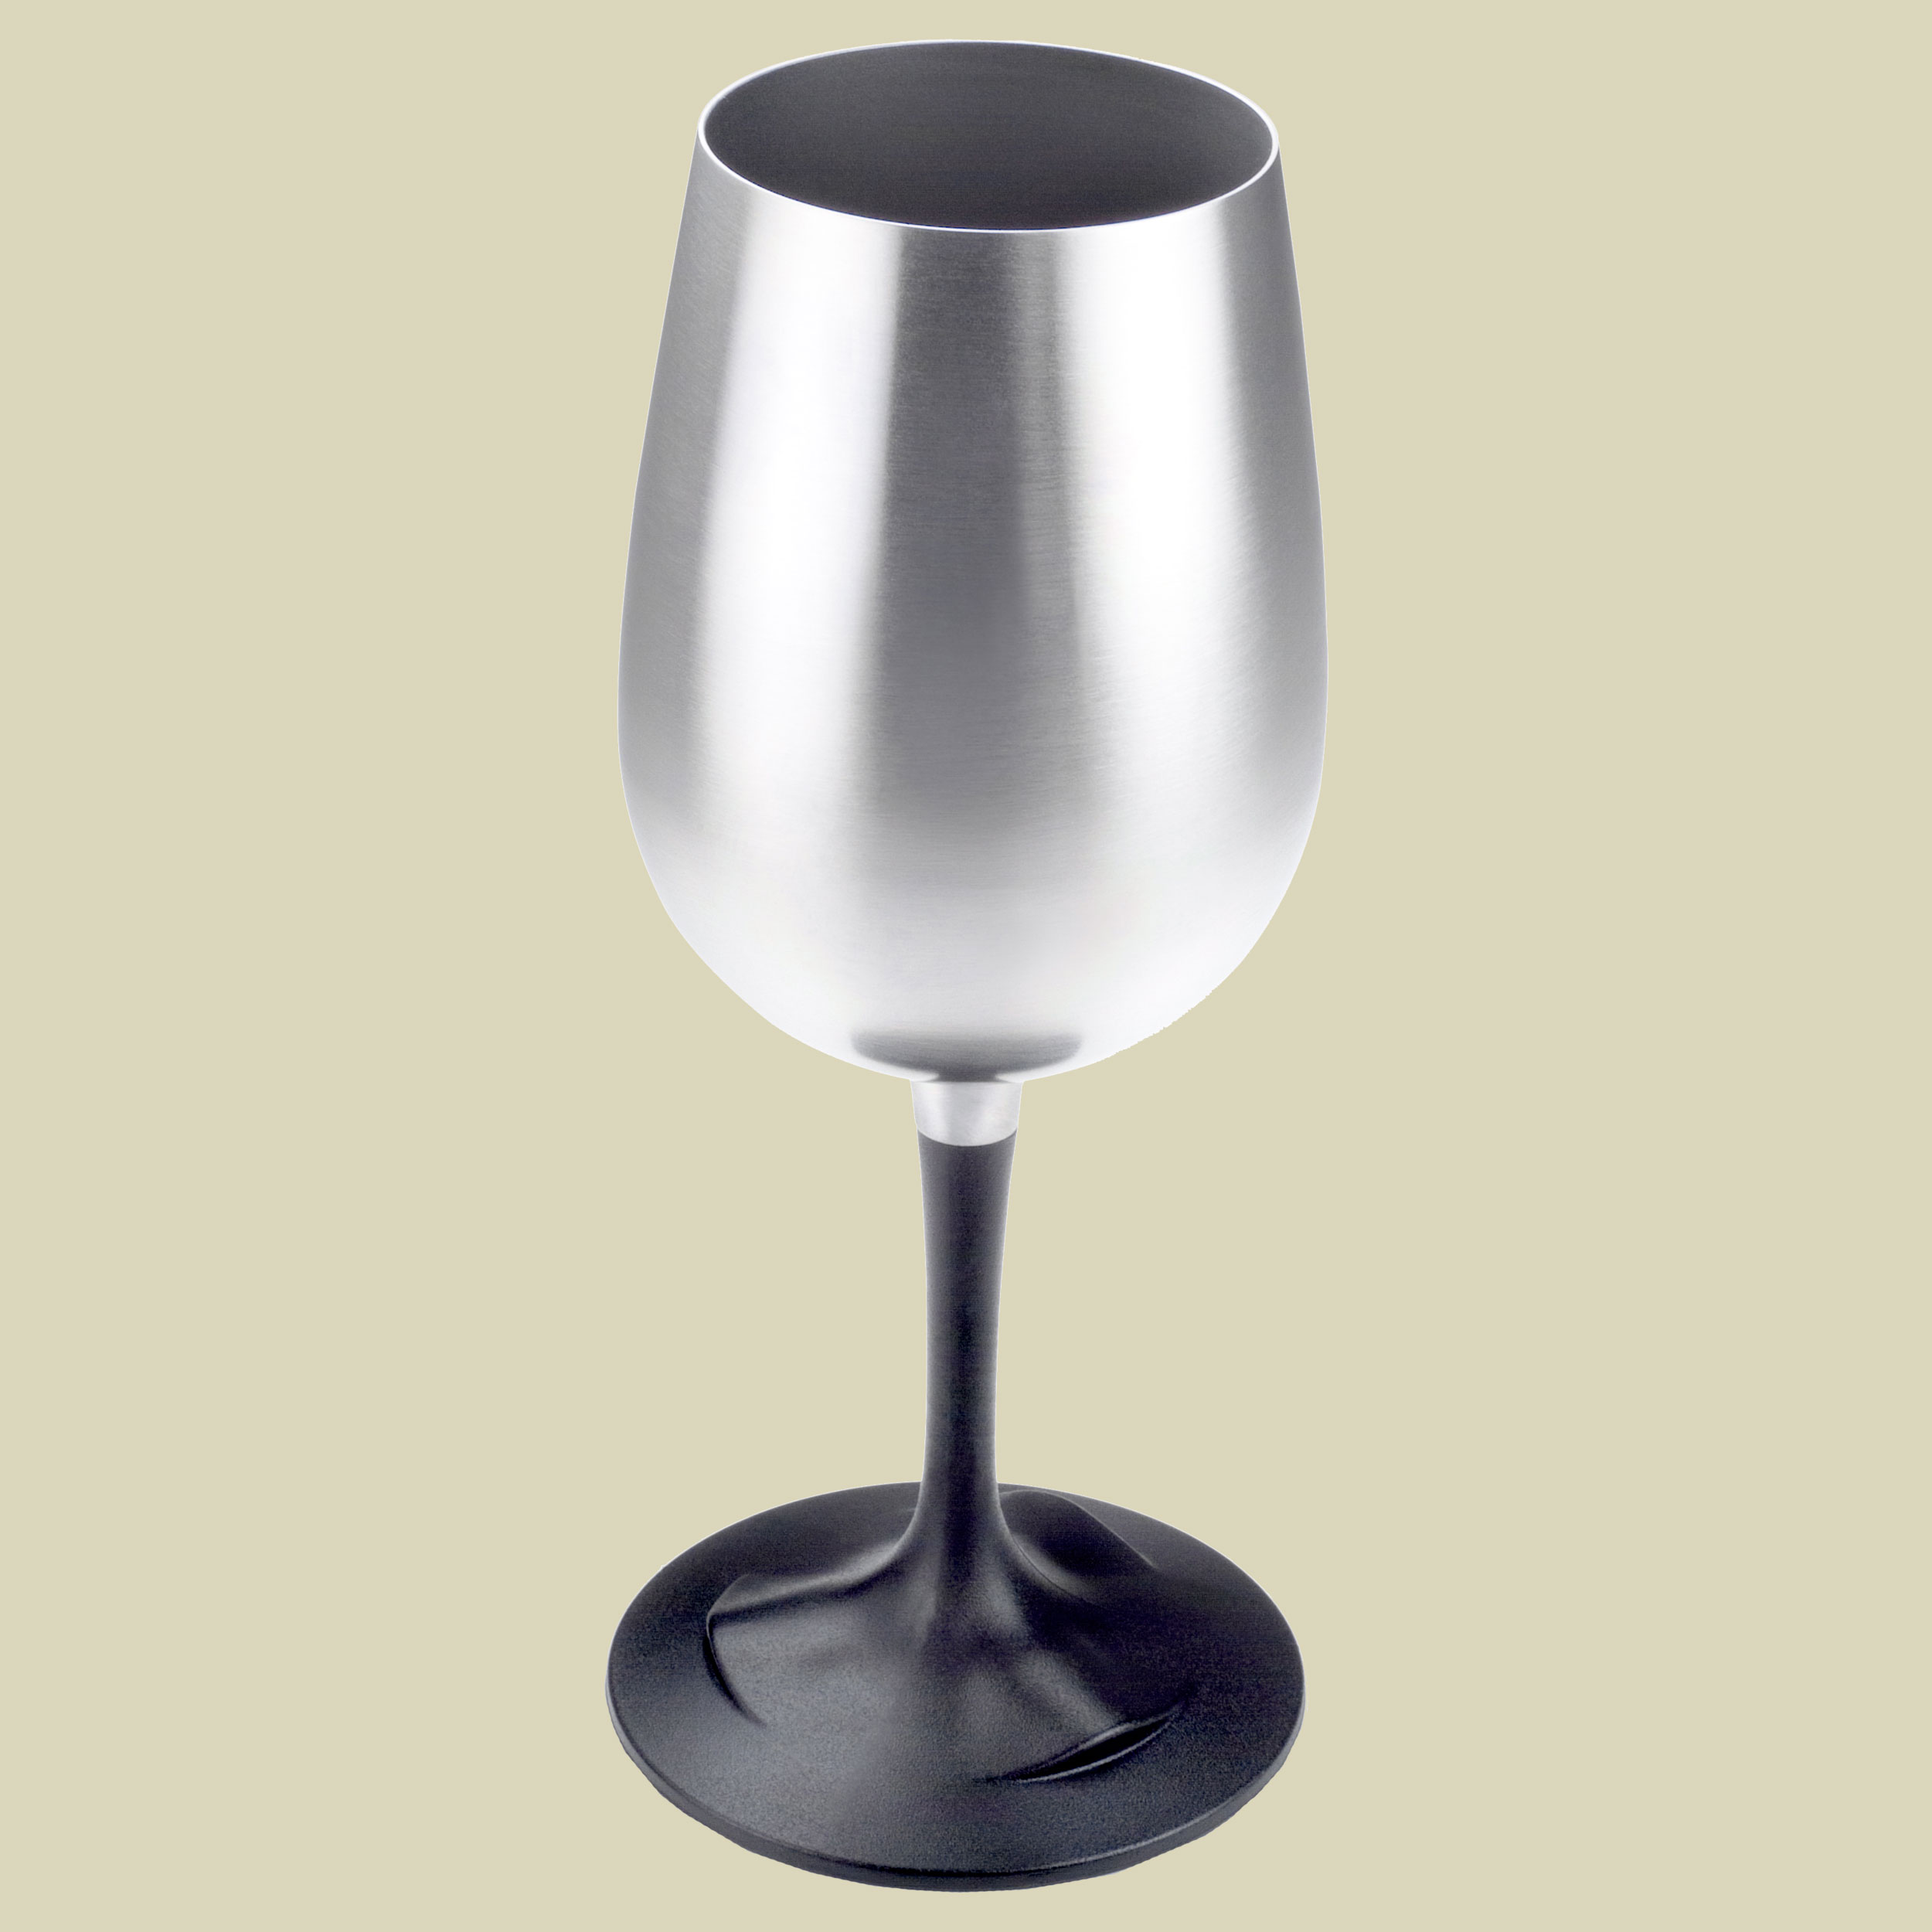 Glacier Stainless Nesting Wine Glass Maße: 18,6 cm hoch